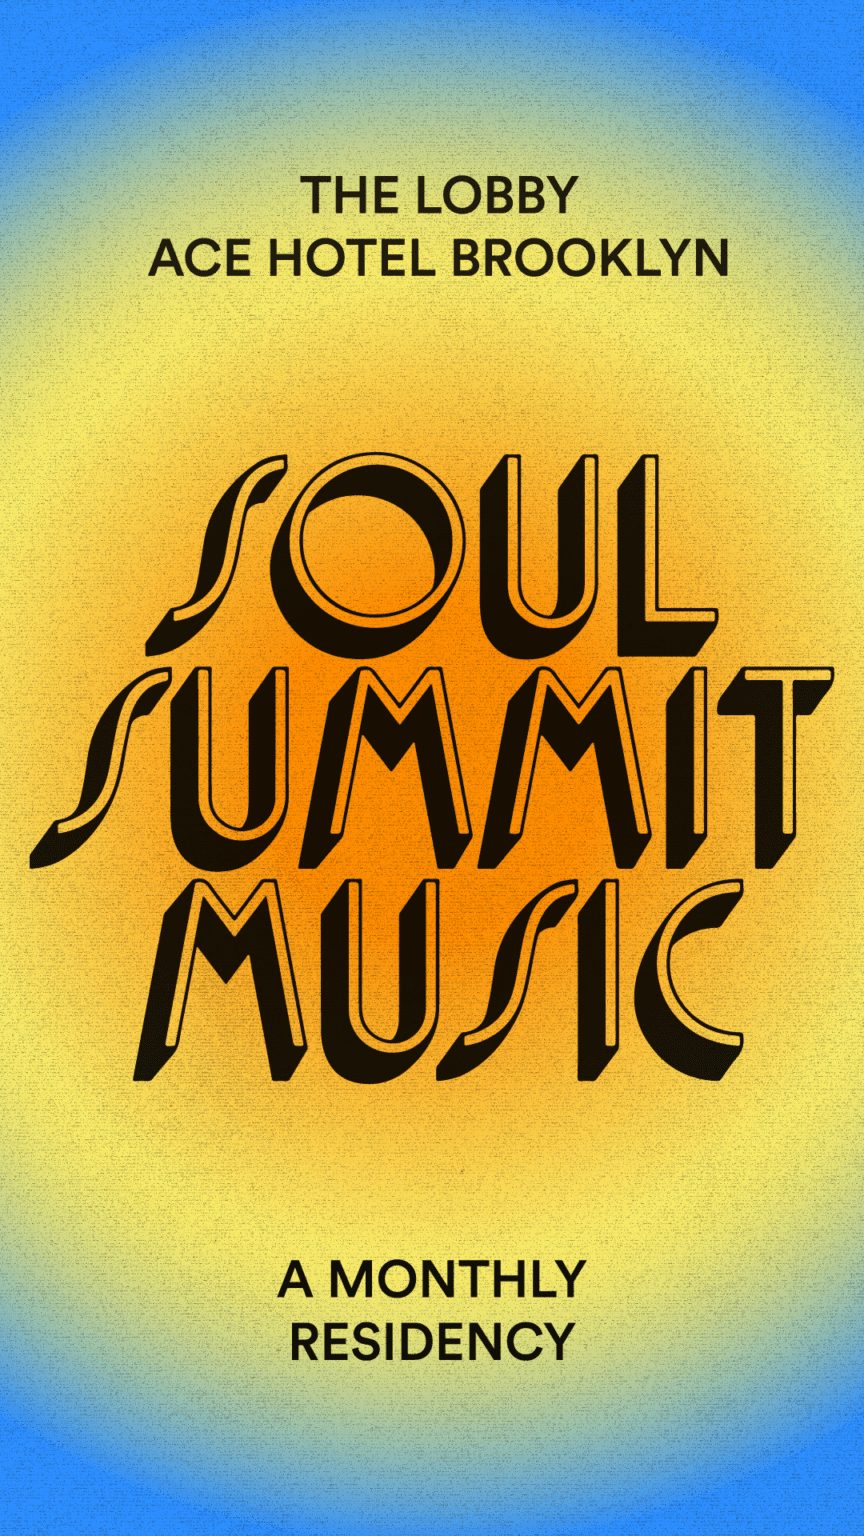 Soul Summit Music promo flyer